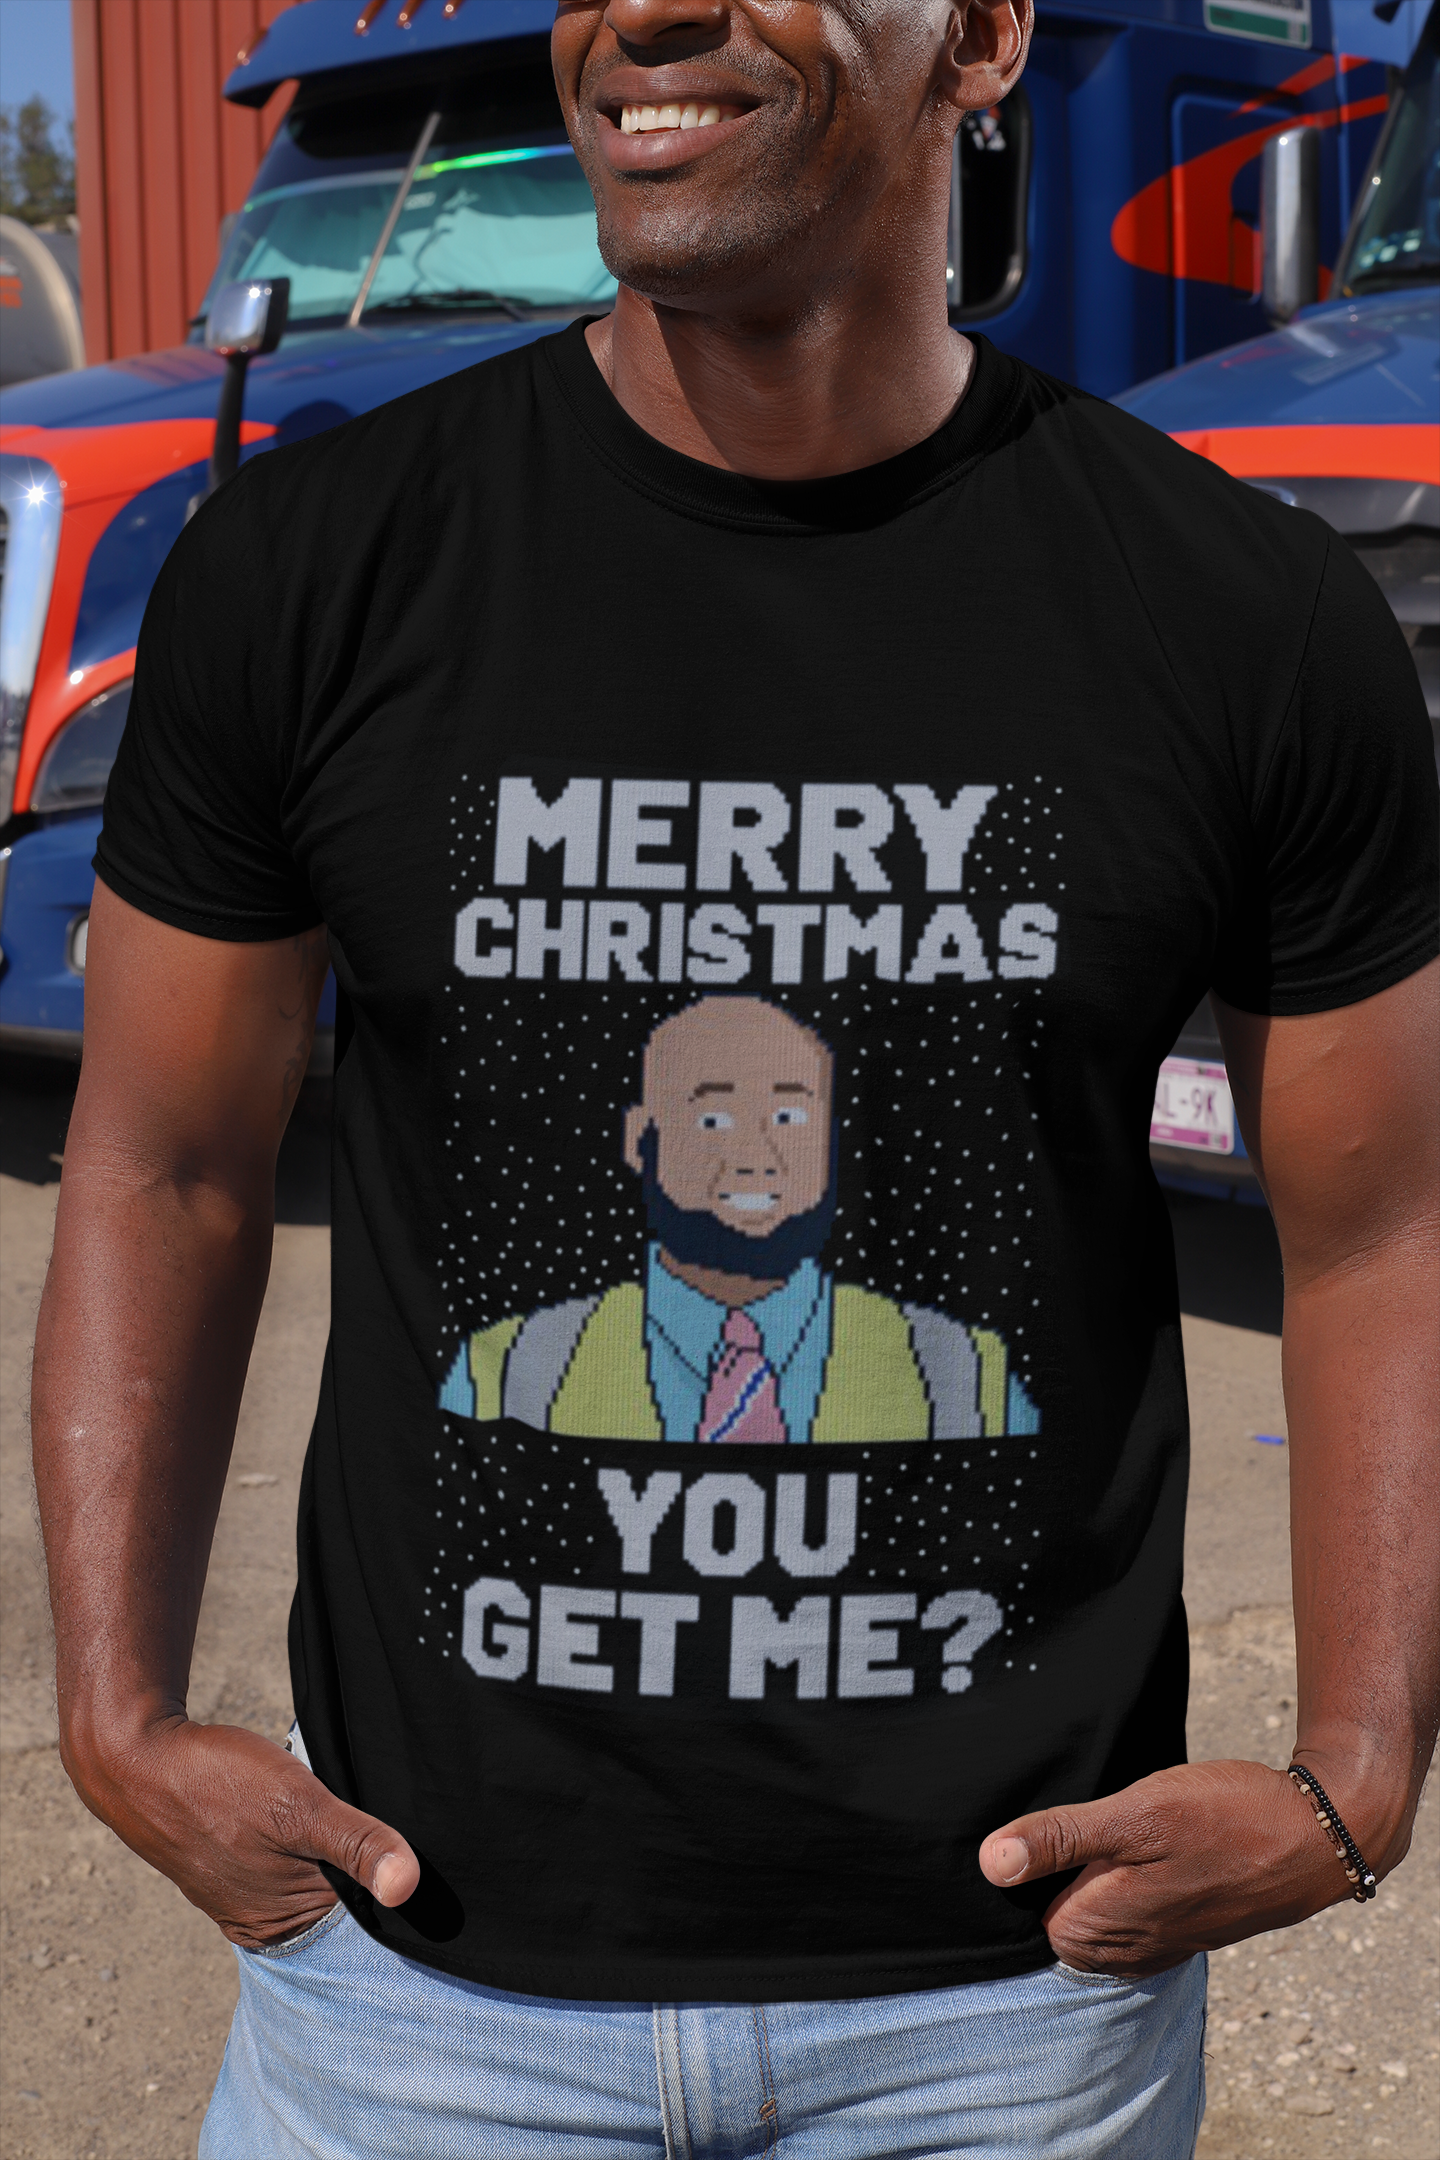 Merry Christmas you get me shirt